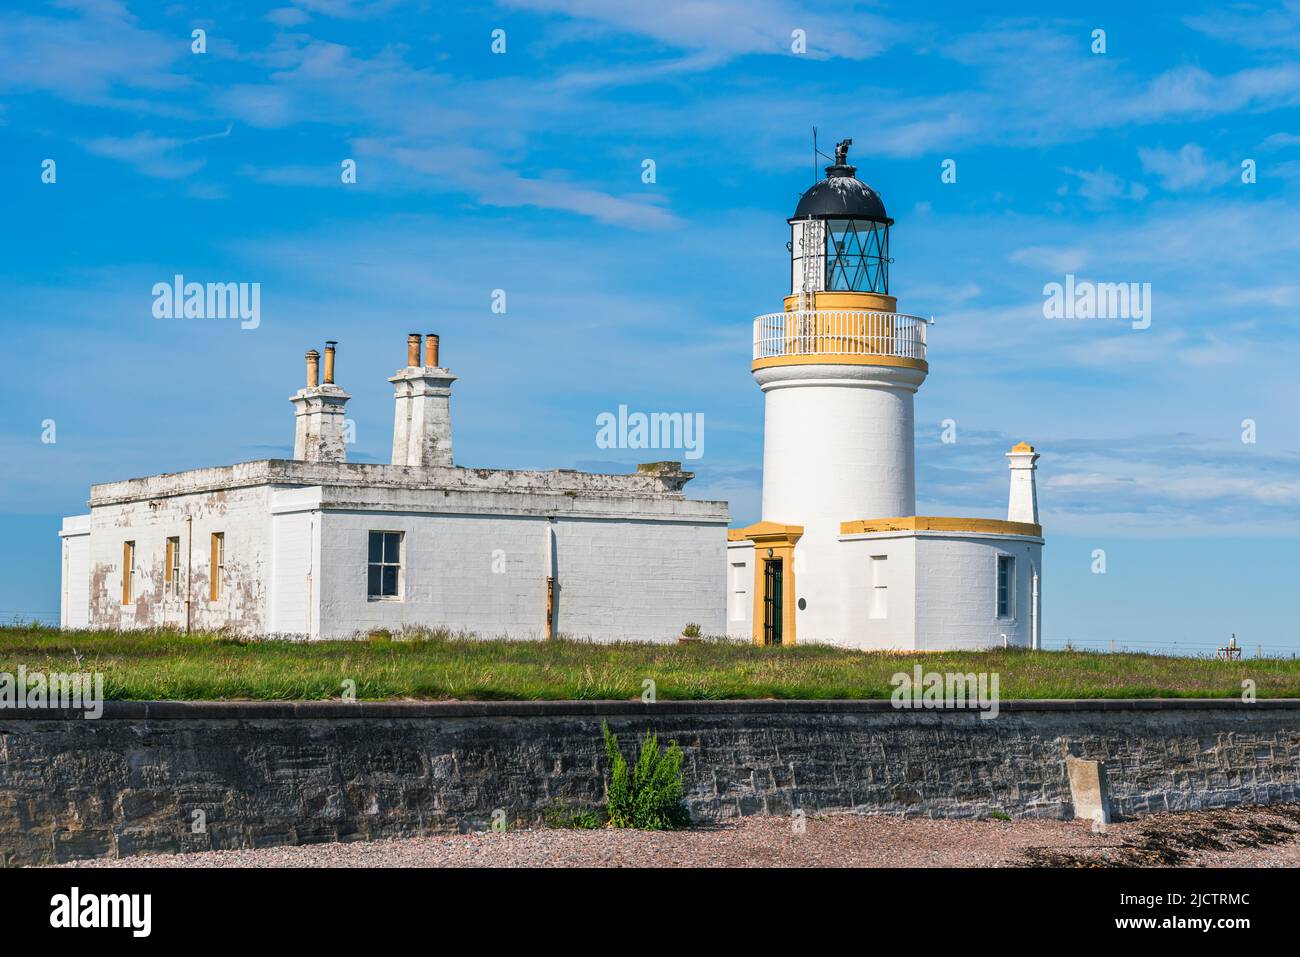 Chanonry Lighthouse on the Black Isle, Chanonry Point, East Coast of Scotland, UK Stock Photo